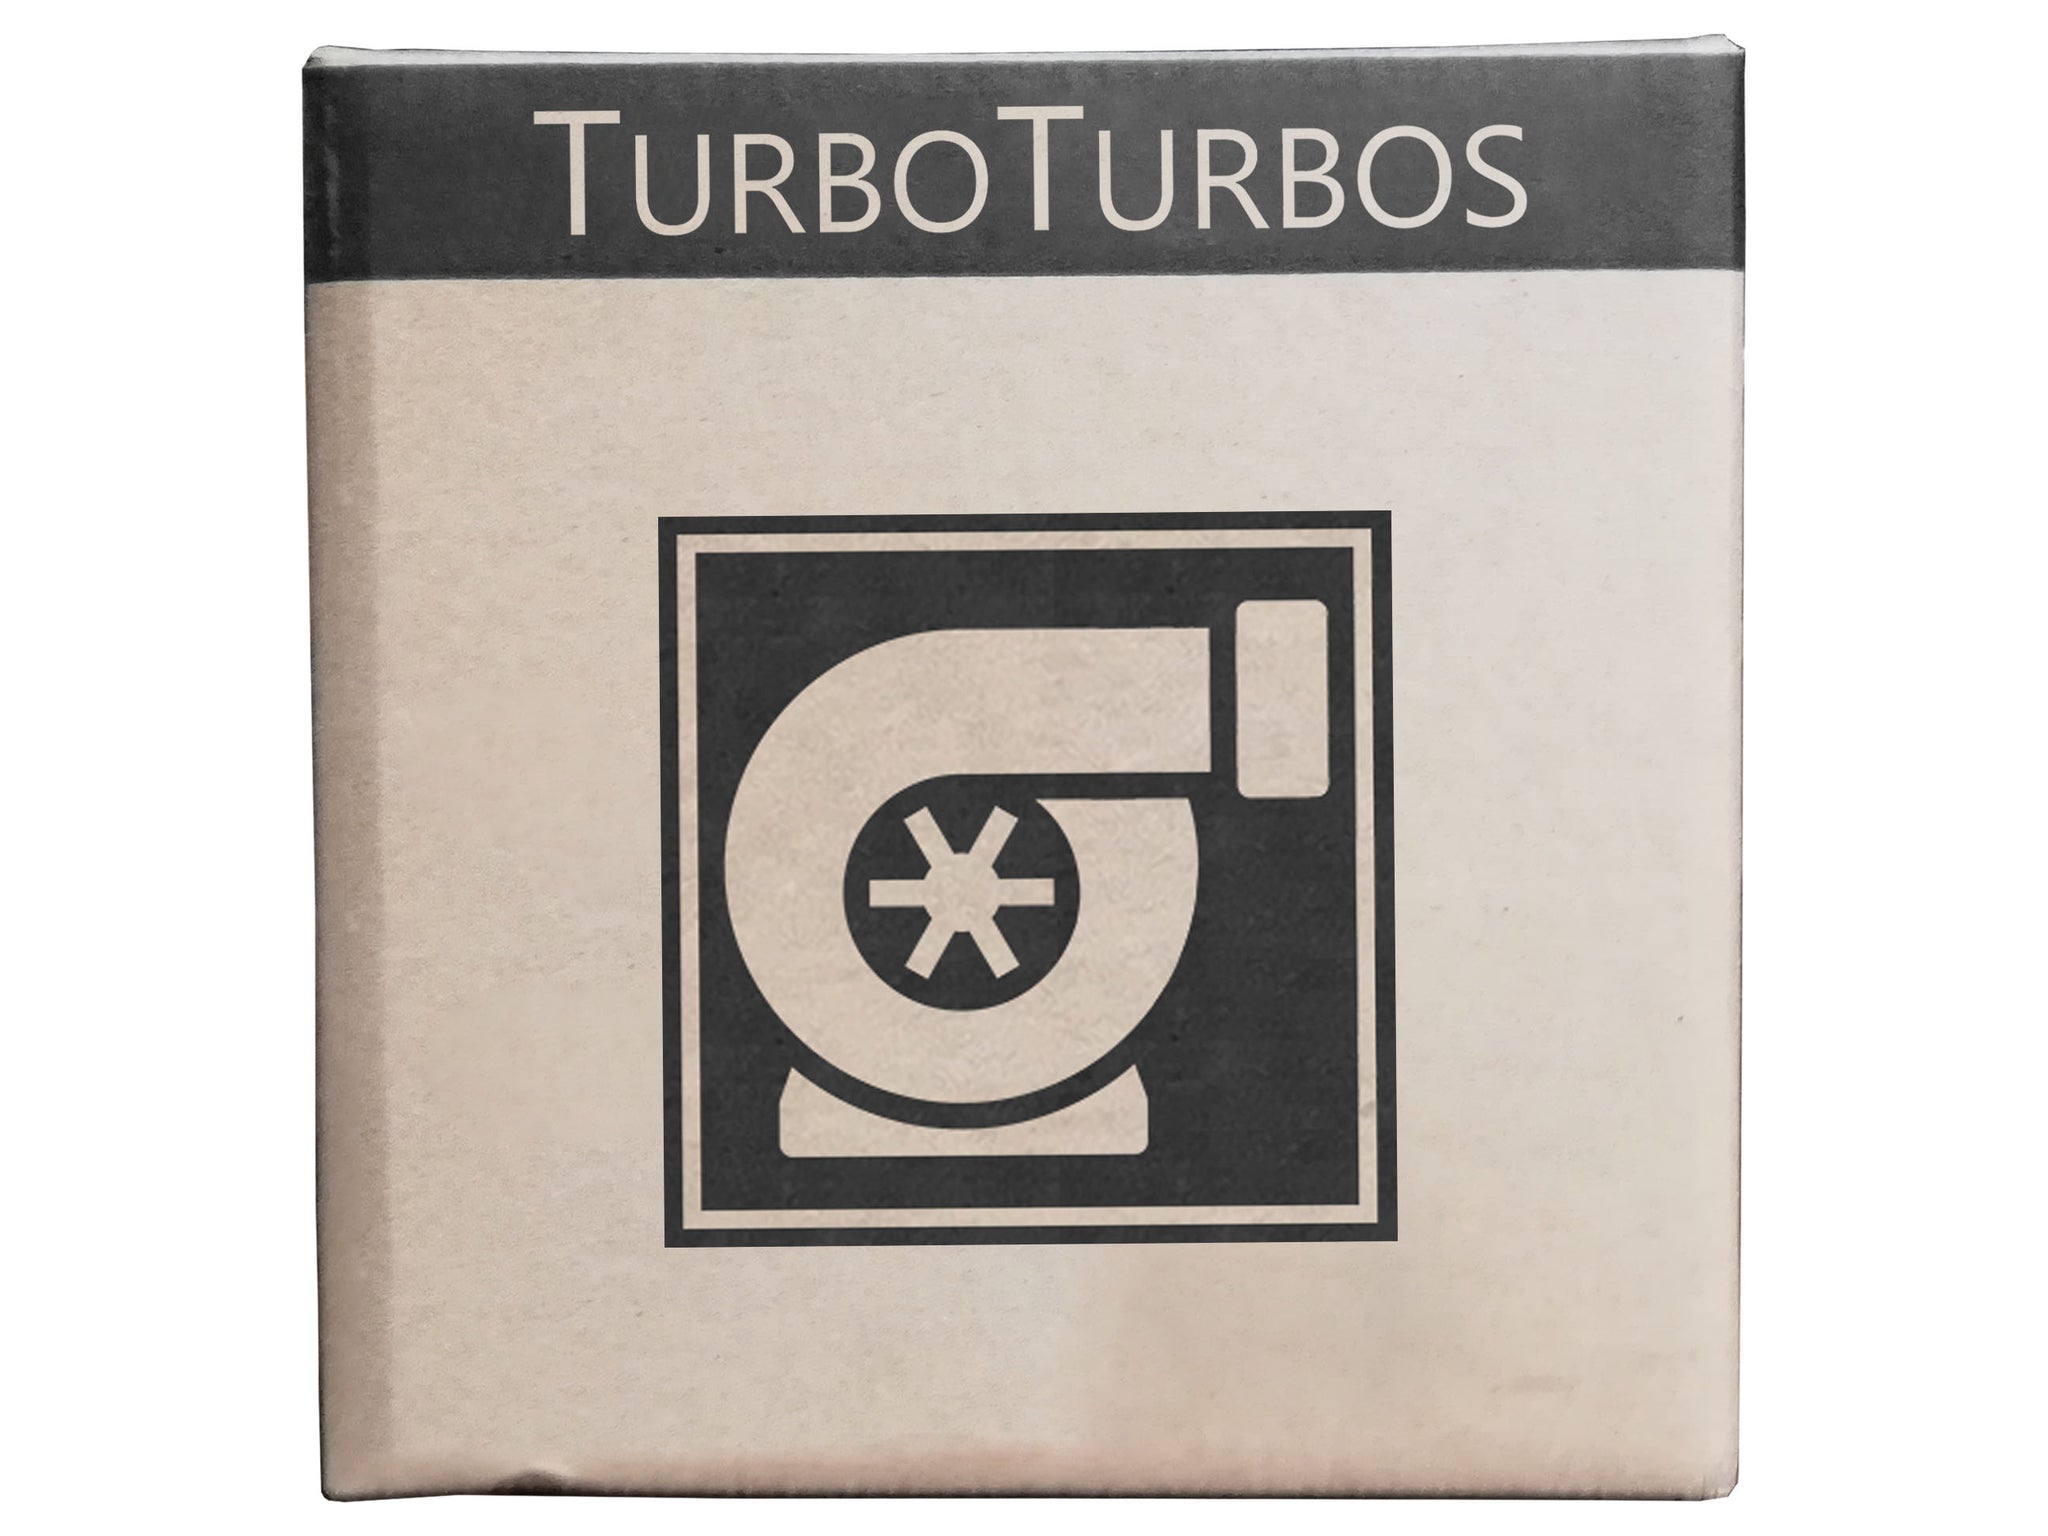 Turbocompresor K27 remanufacturado 53279886533